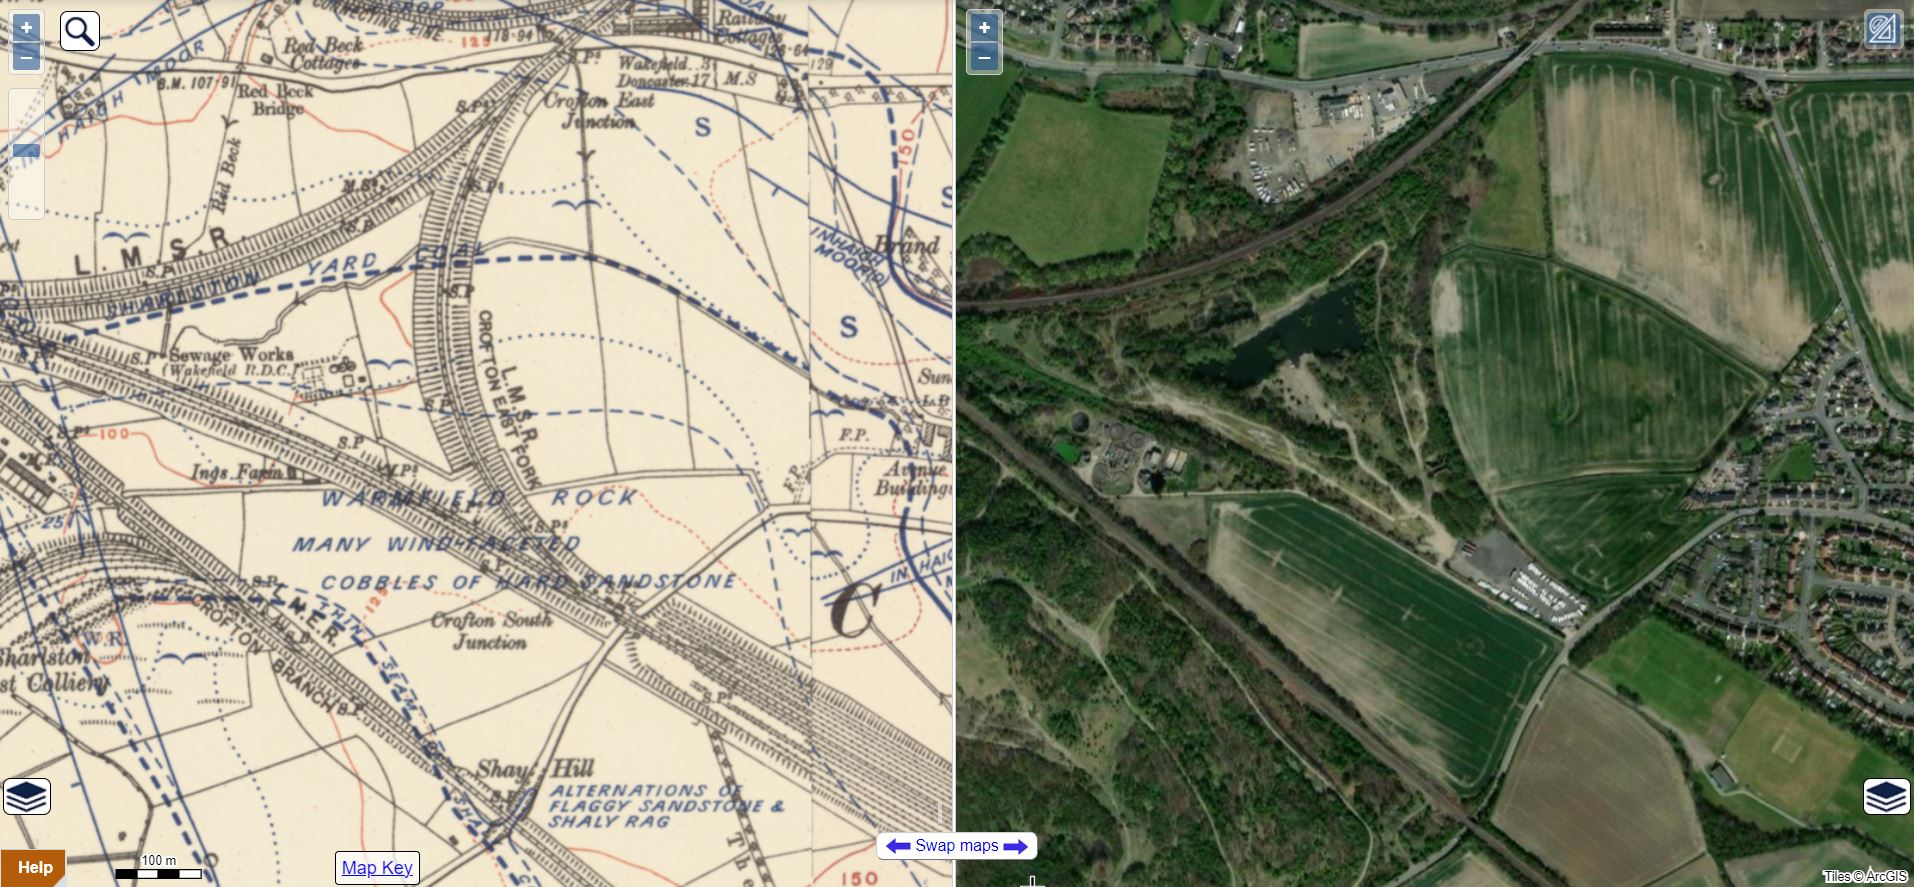 Side by side map showing the junction near Walton